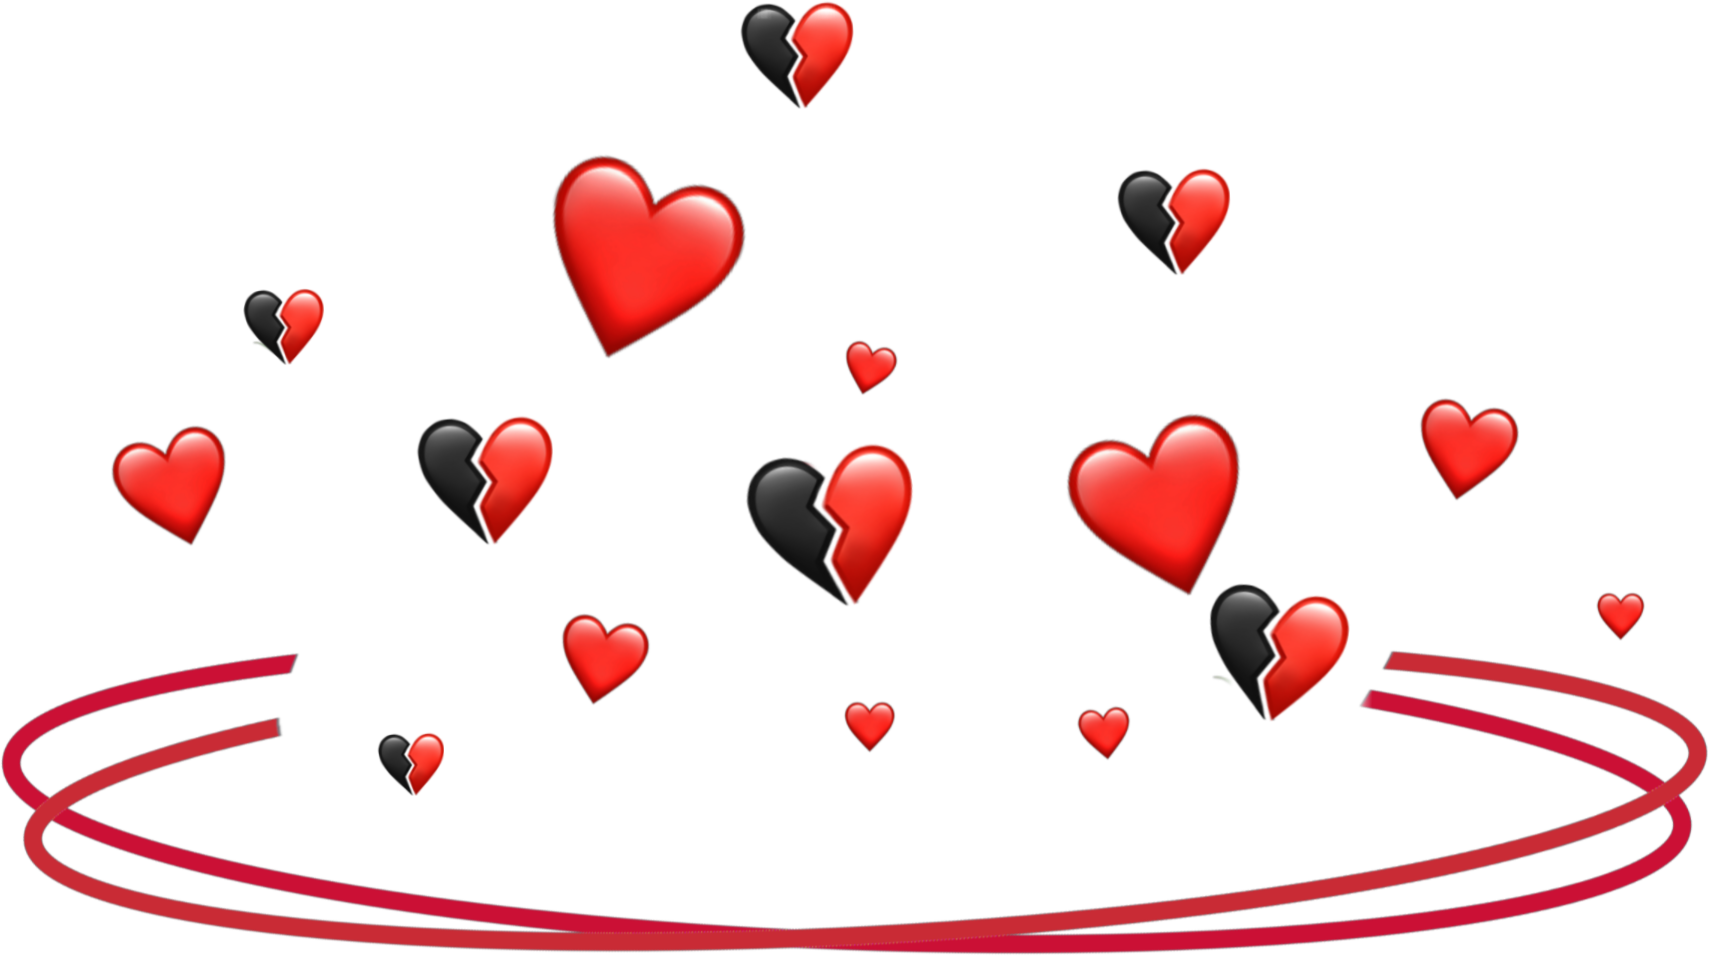 crown heart ring red black brokenheart broken emoji emo...